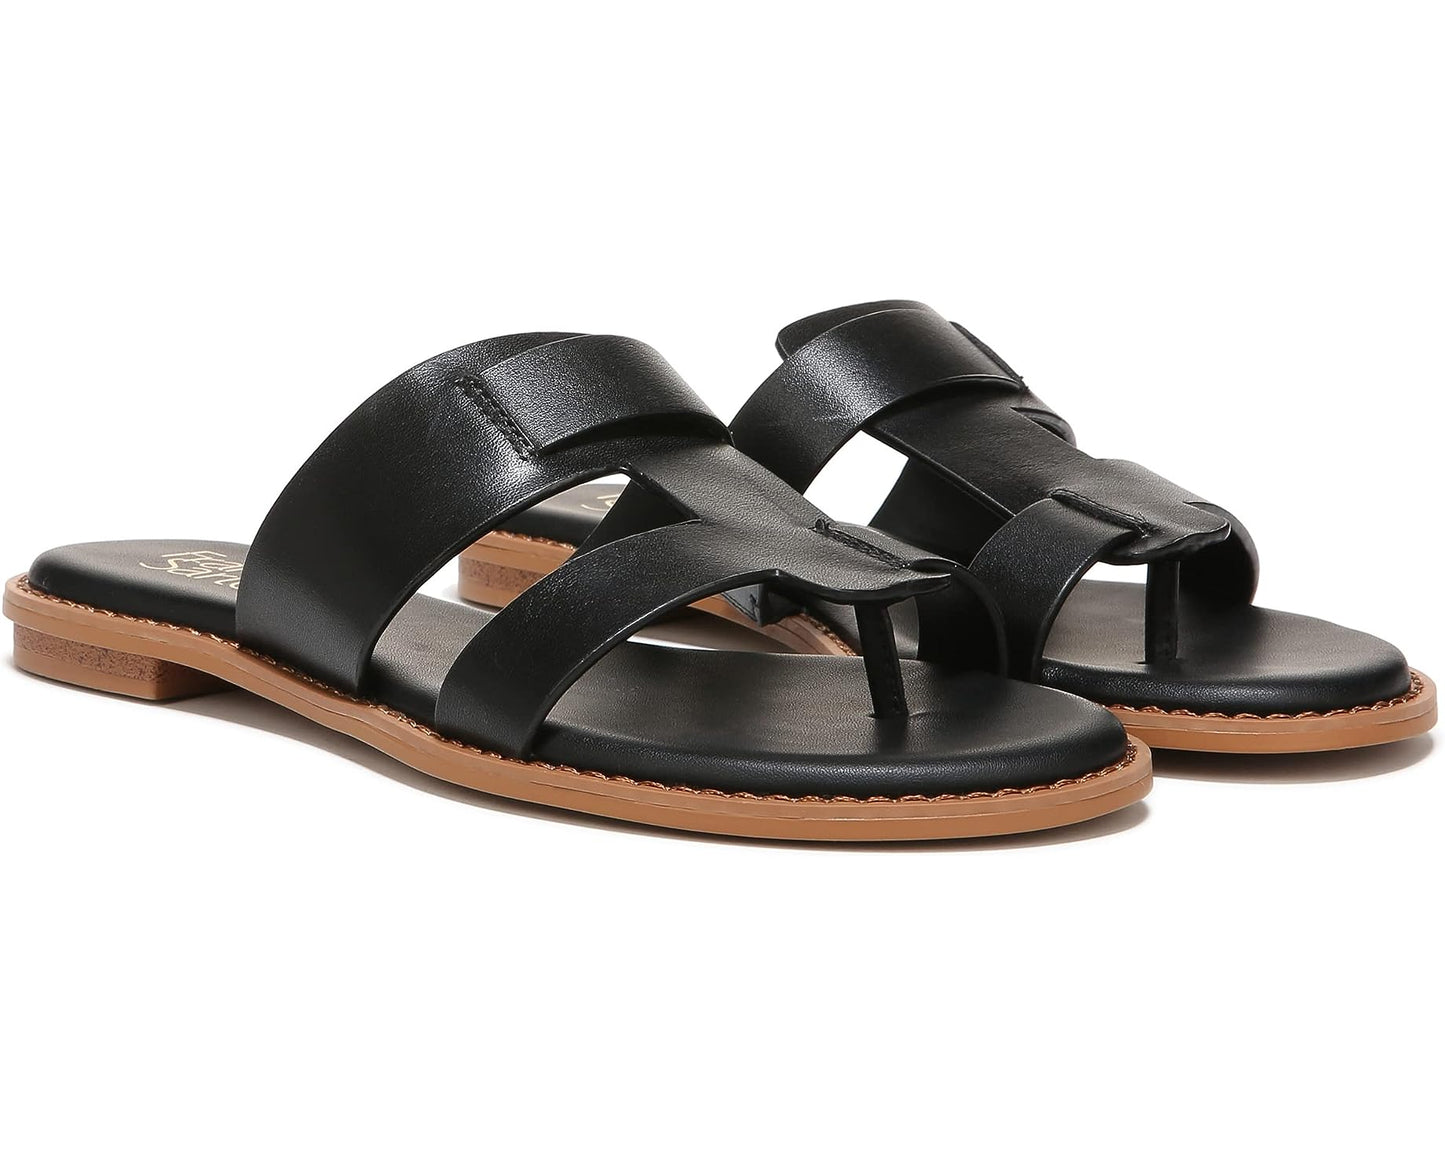 Gretta Black Leather Franco Sarto Flat Sandals